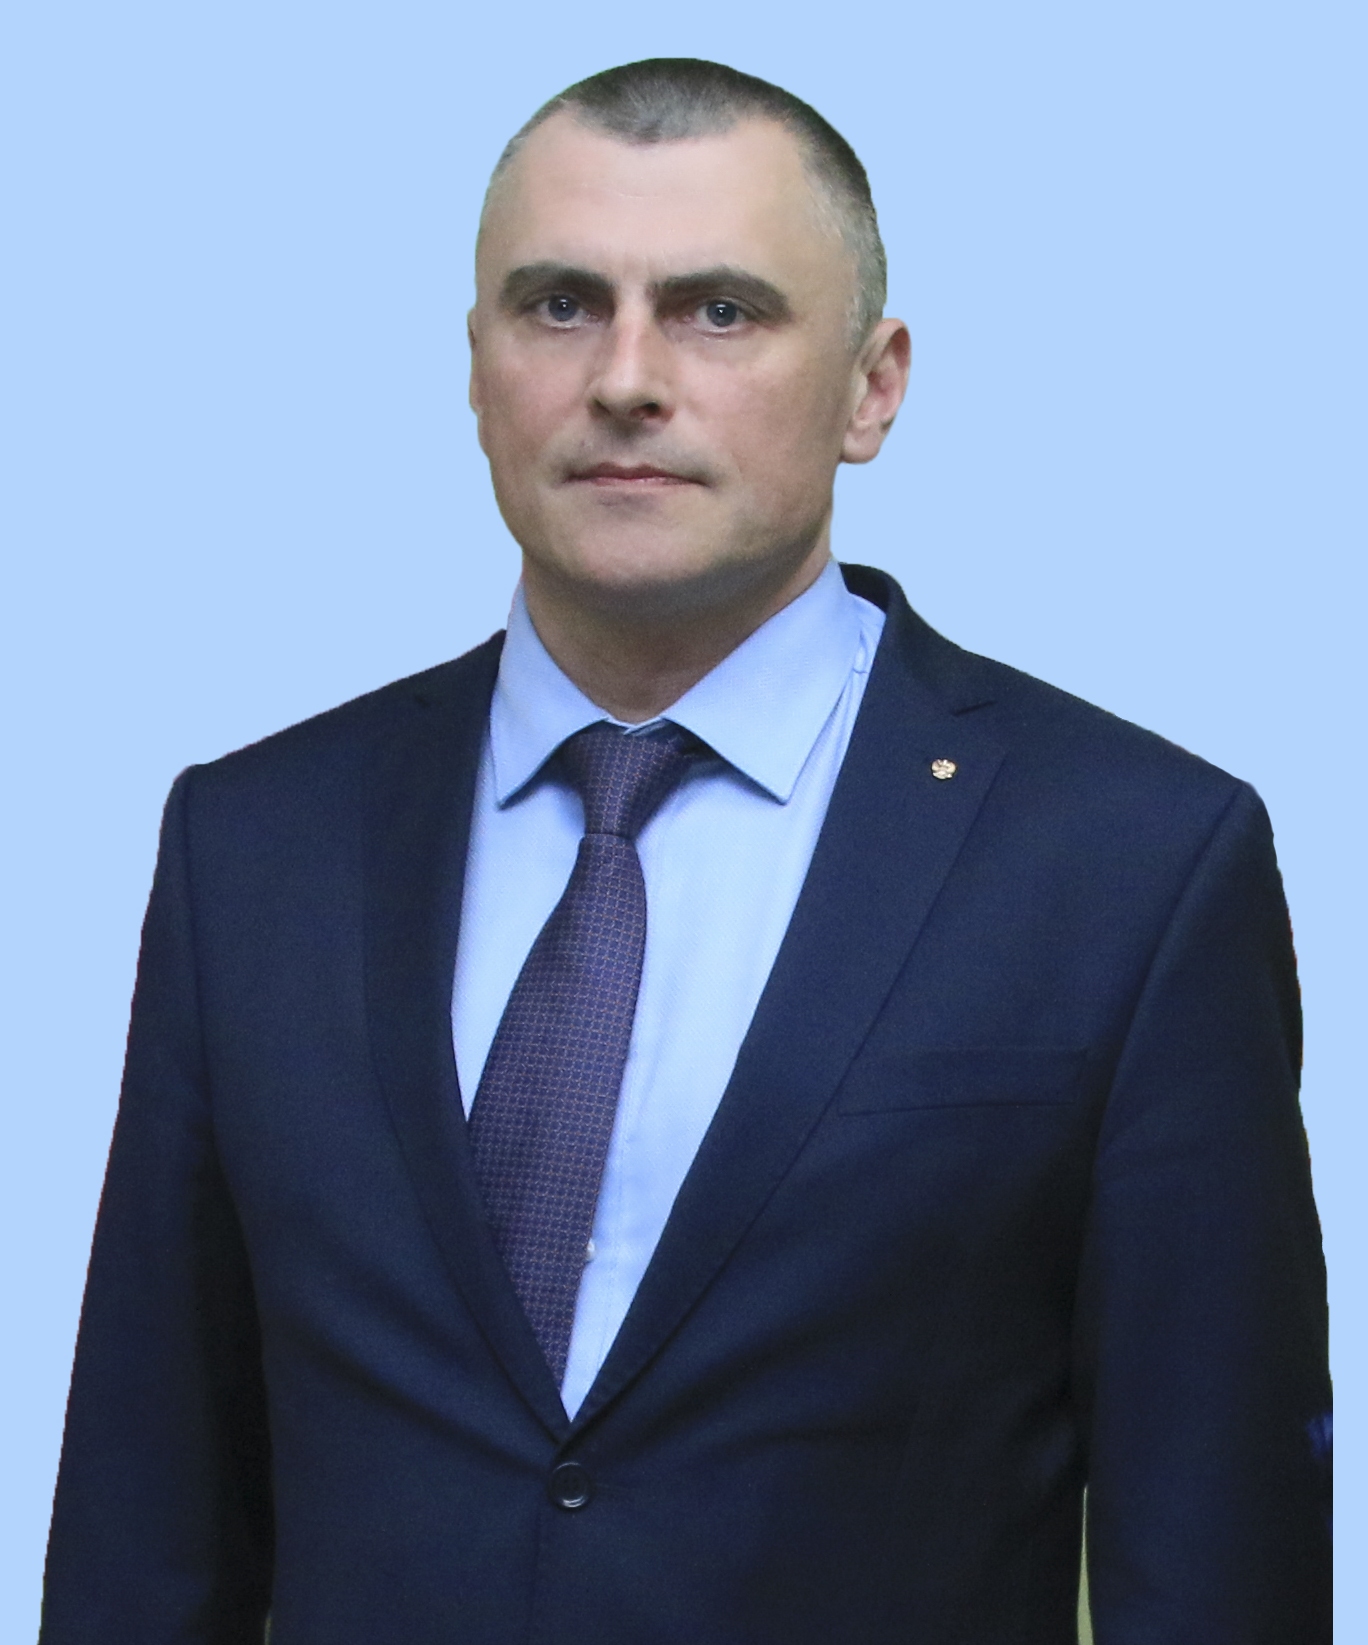             Травников Александр Владимирович
    